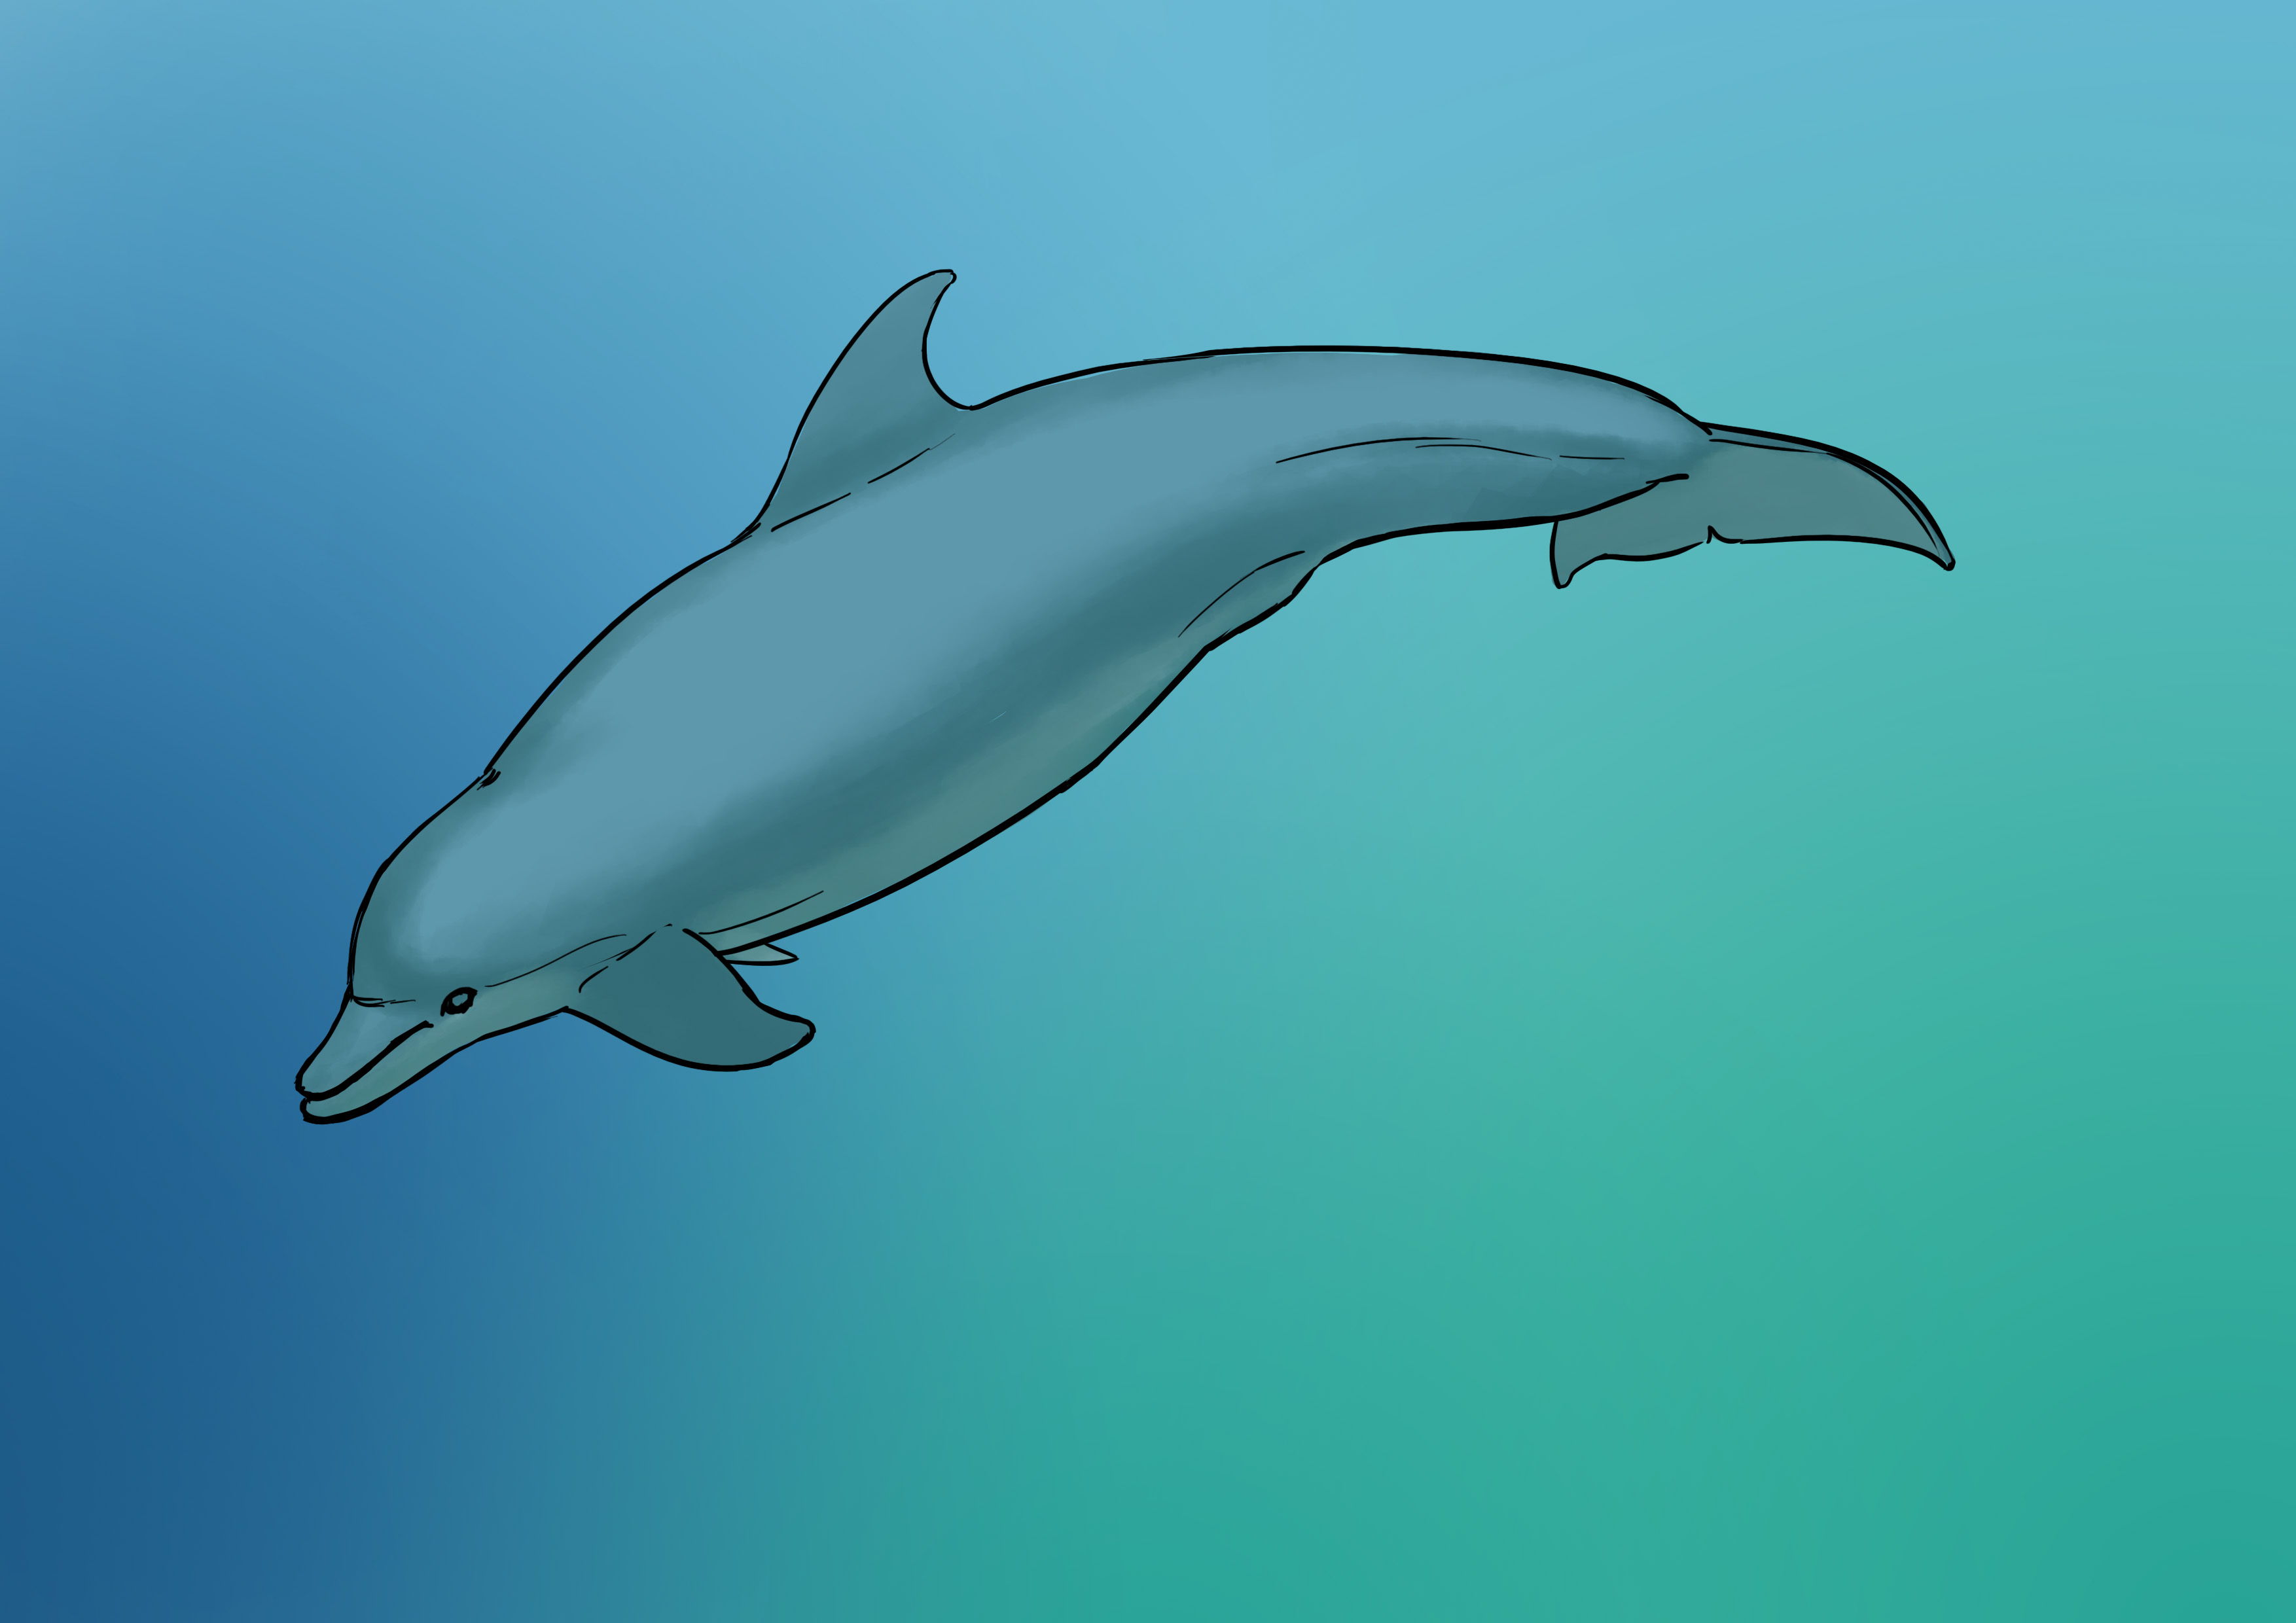 Ombrage du dessin de dauphin